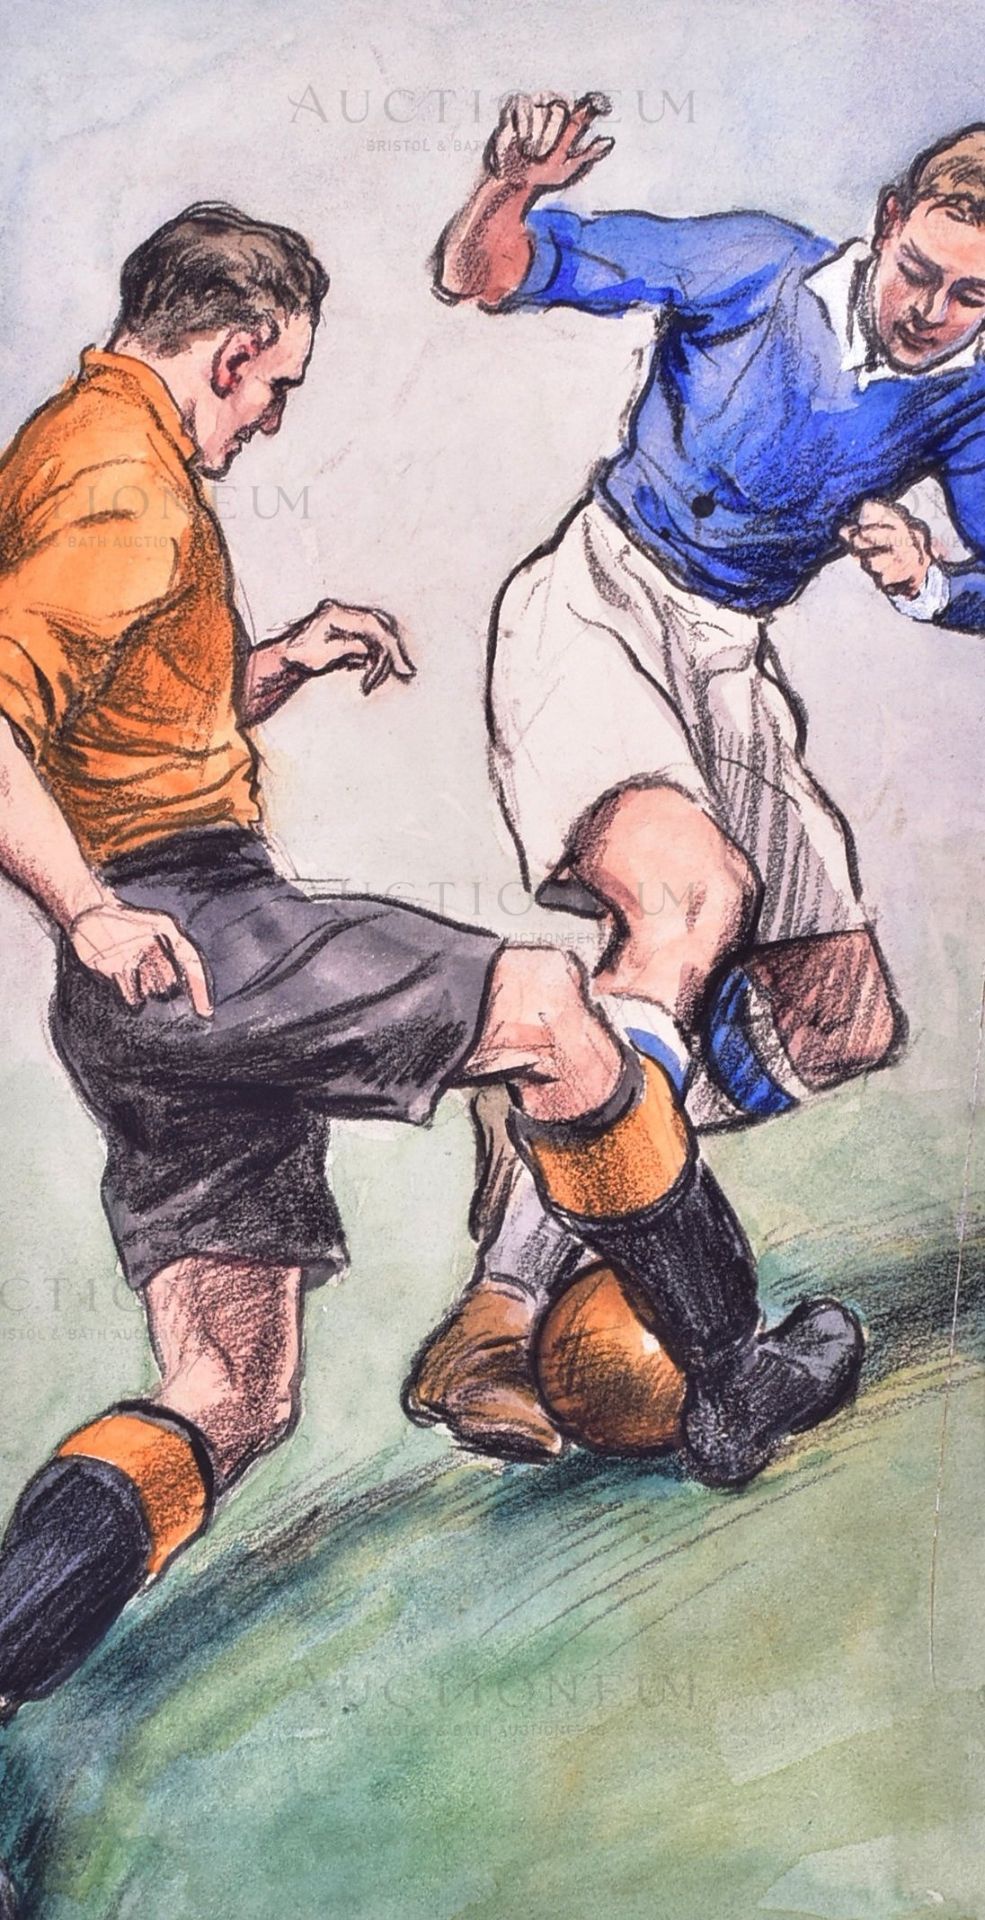 HINTS ON ASSOCIATION FOOTBALL (1934) - ORIGINAL CIGARETTE CARD ARTWORK